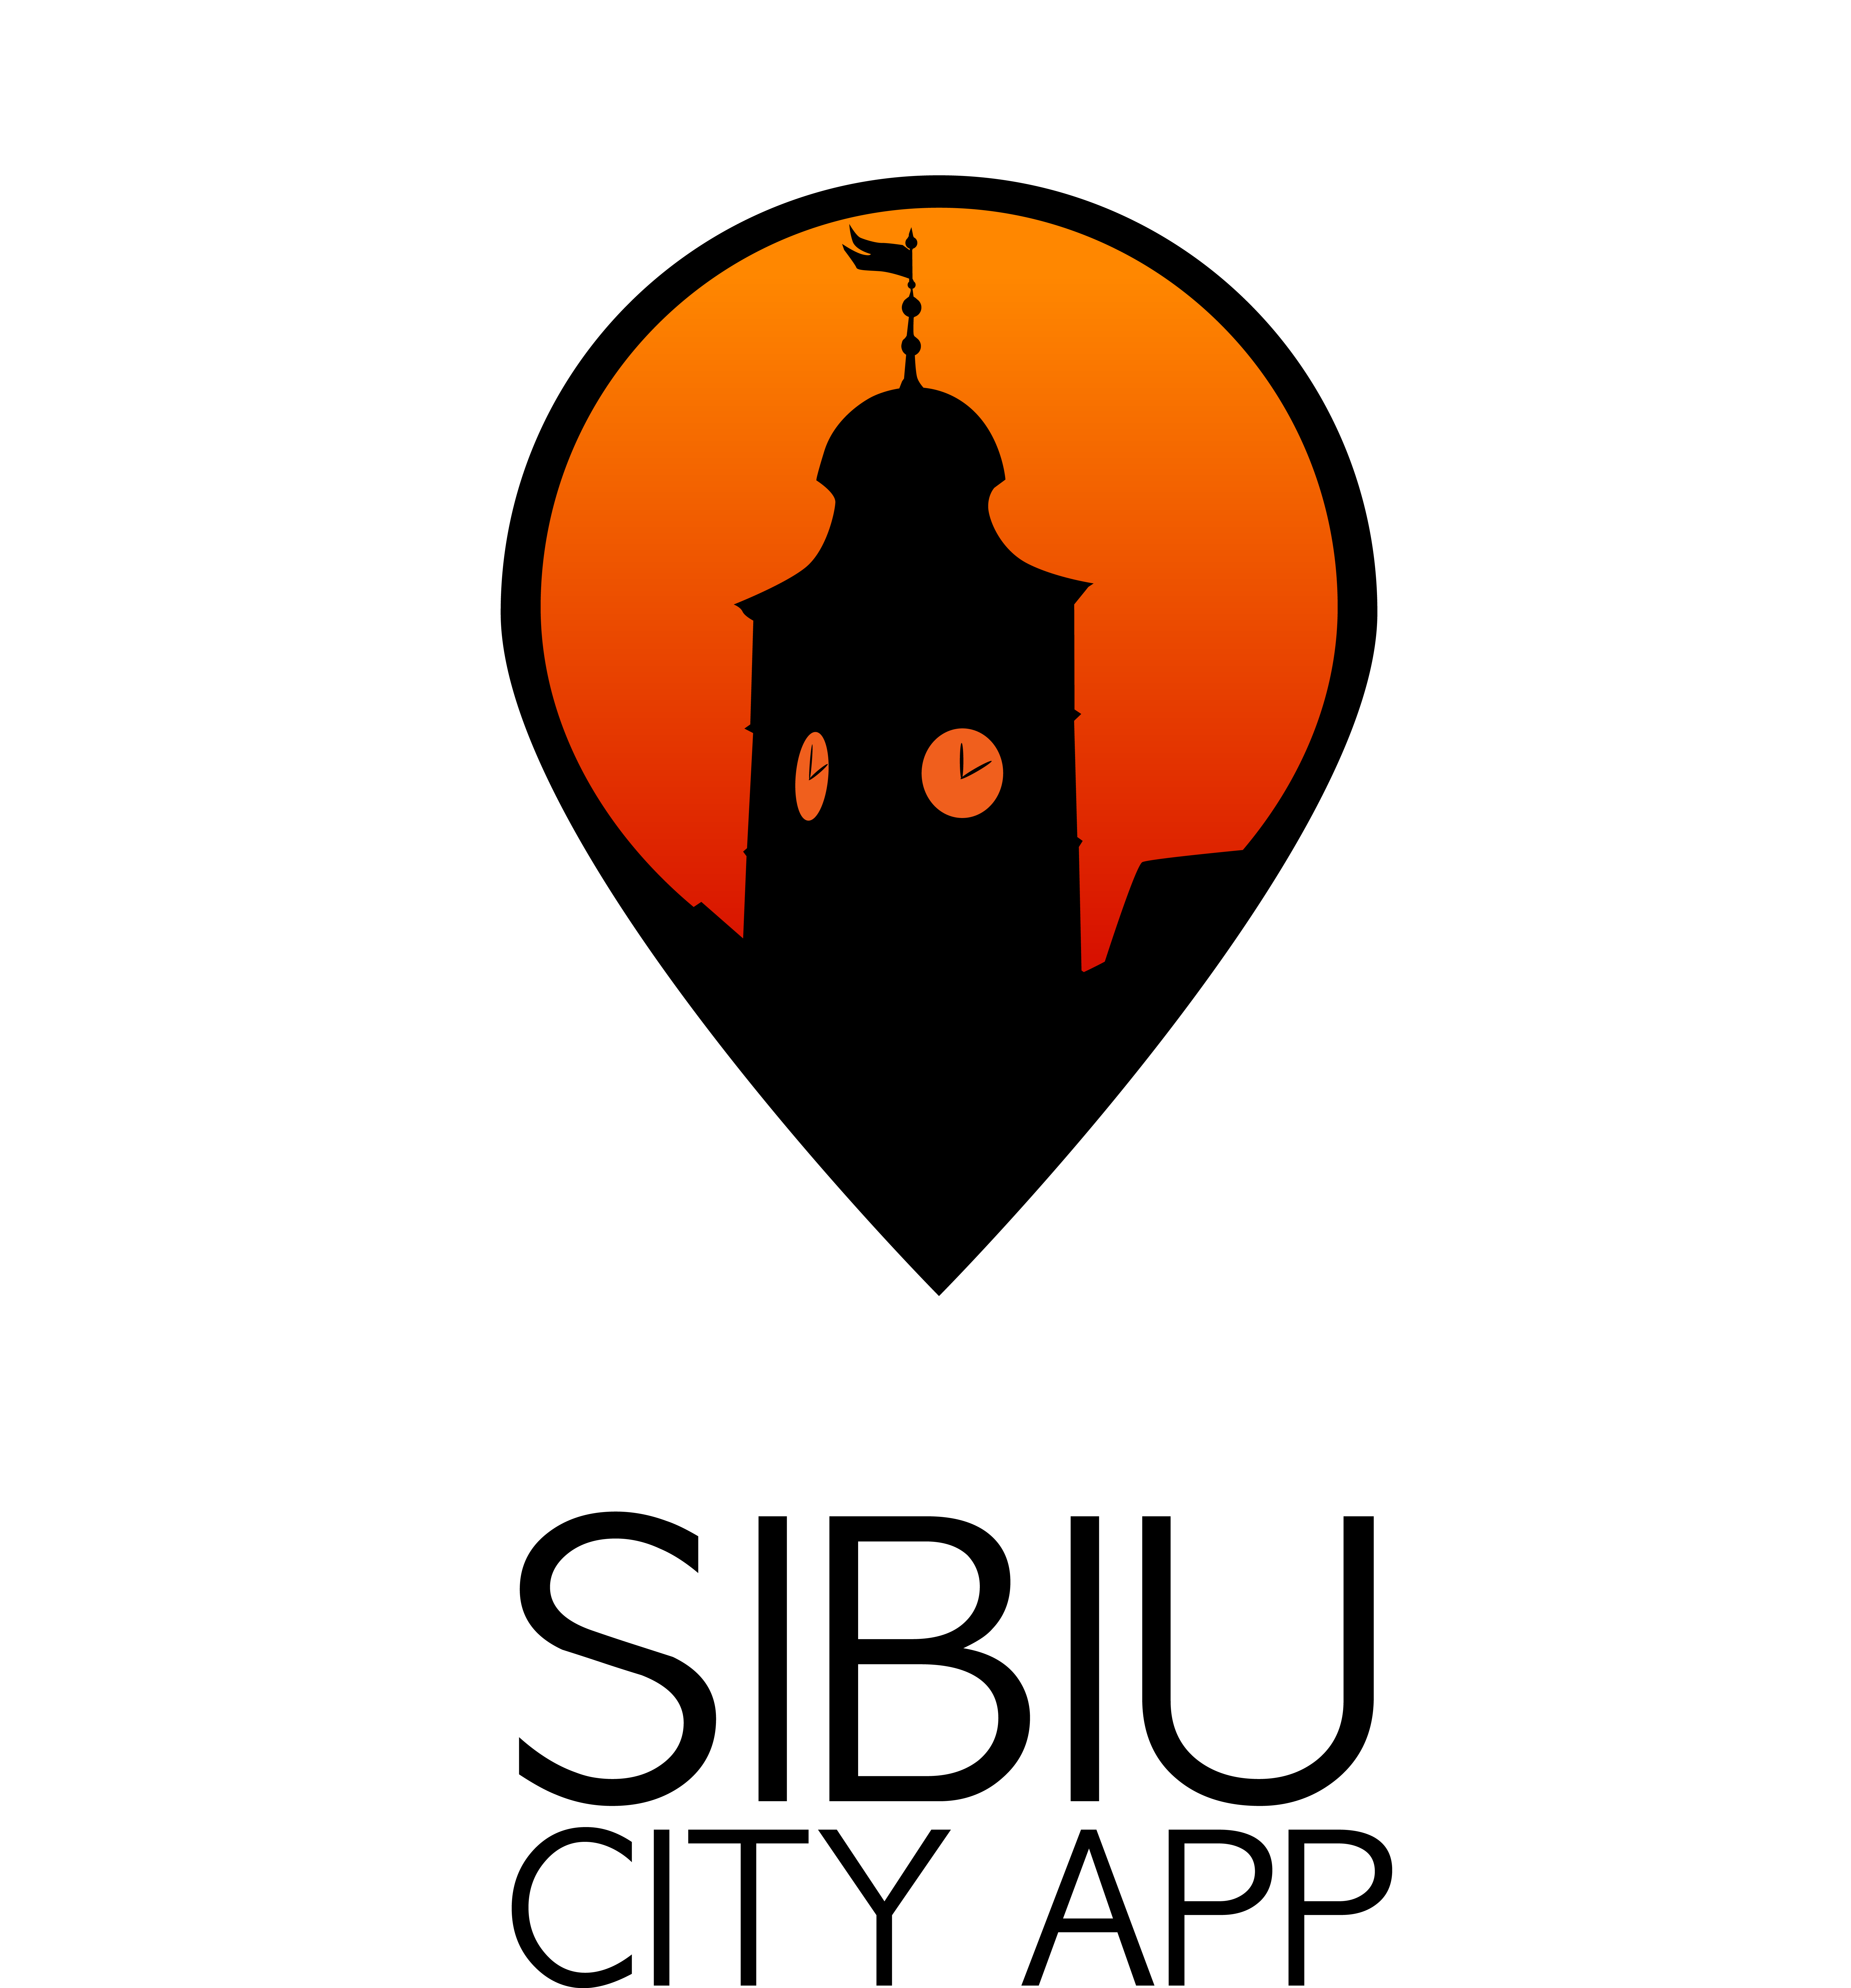 Sibiu City App